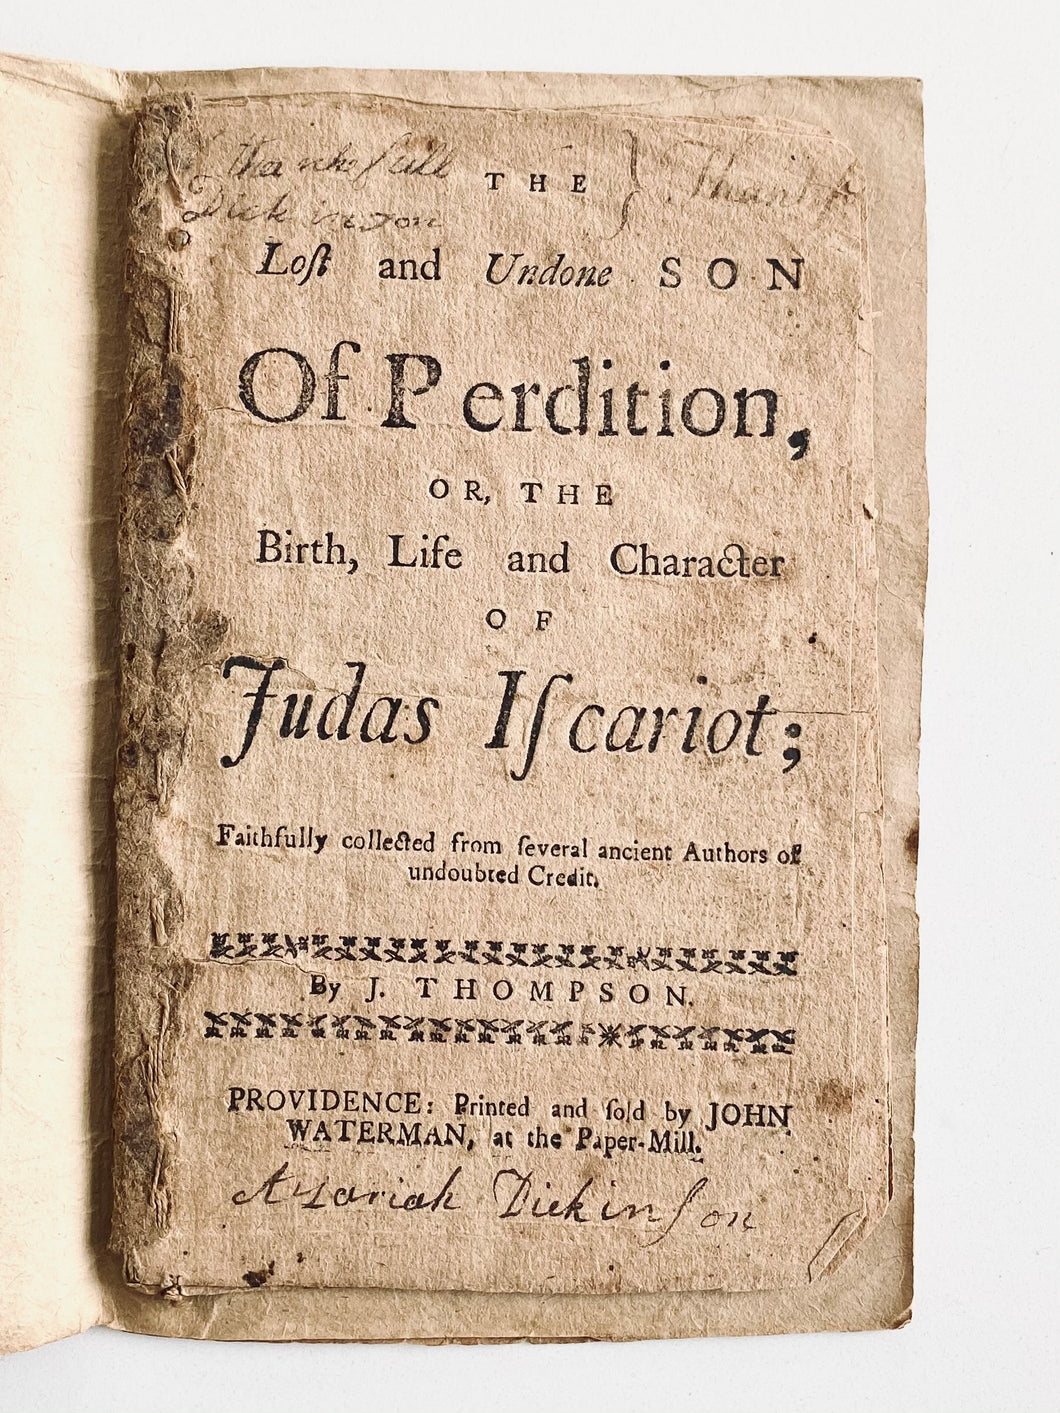 1769 JOHN THOMPSON. Judas Iscariot. The Lost and Undone Son of Perdition. Rare Rhode Island Imprint